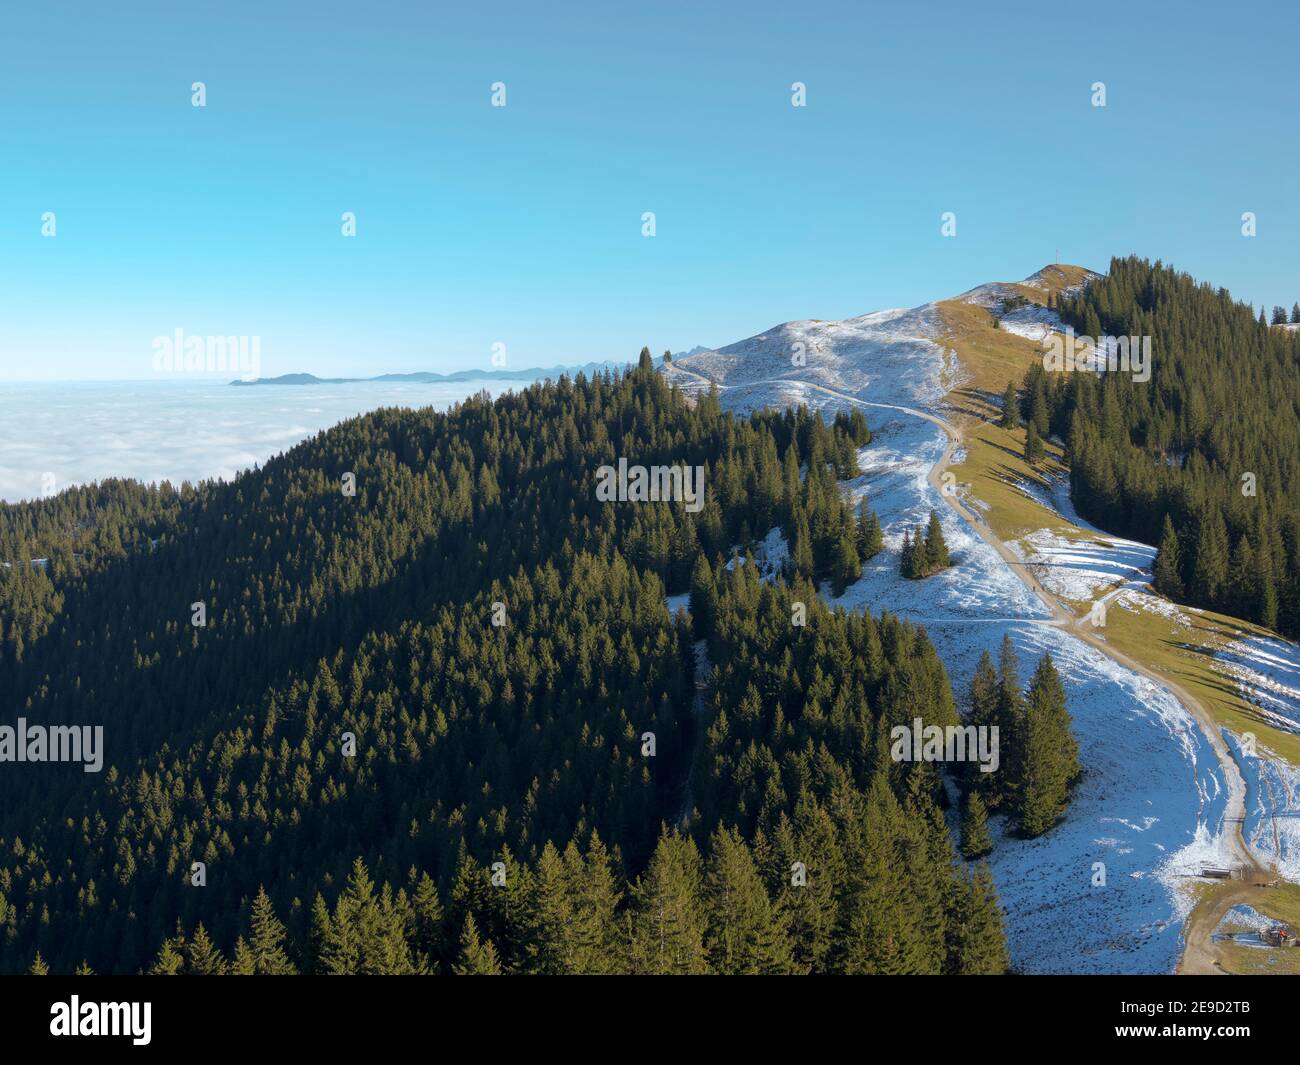 Monte Hinteres Hoernle. alpi Bavaresi nei pressi di Unterammergau, nella regione di Werdenfelser (contea di Werdenfels). Europa, Germania, Baviera Foto Stock